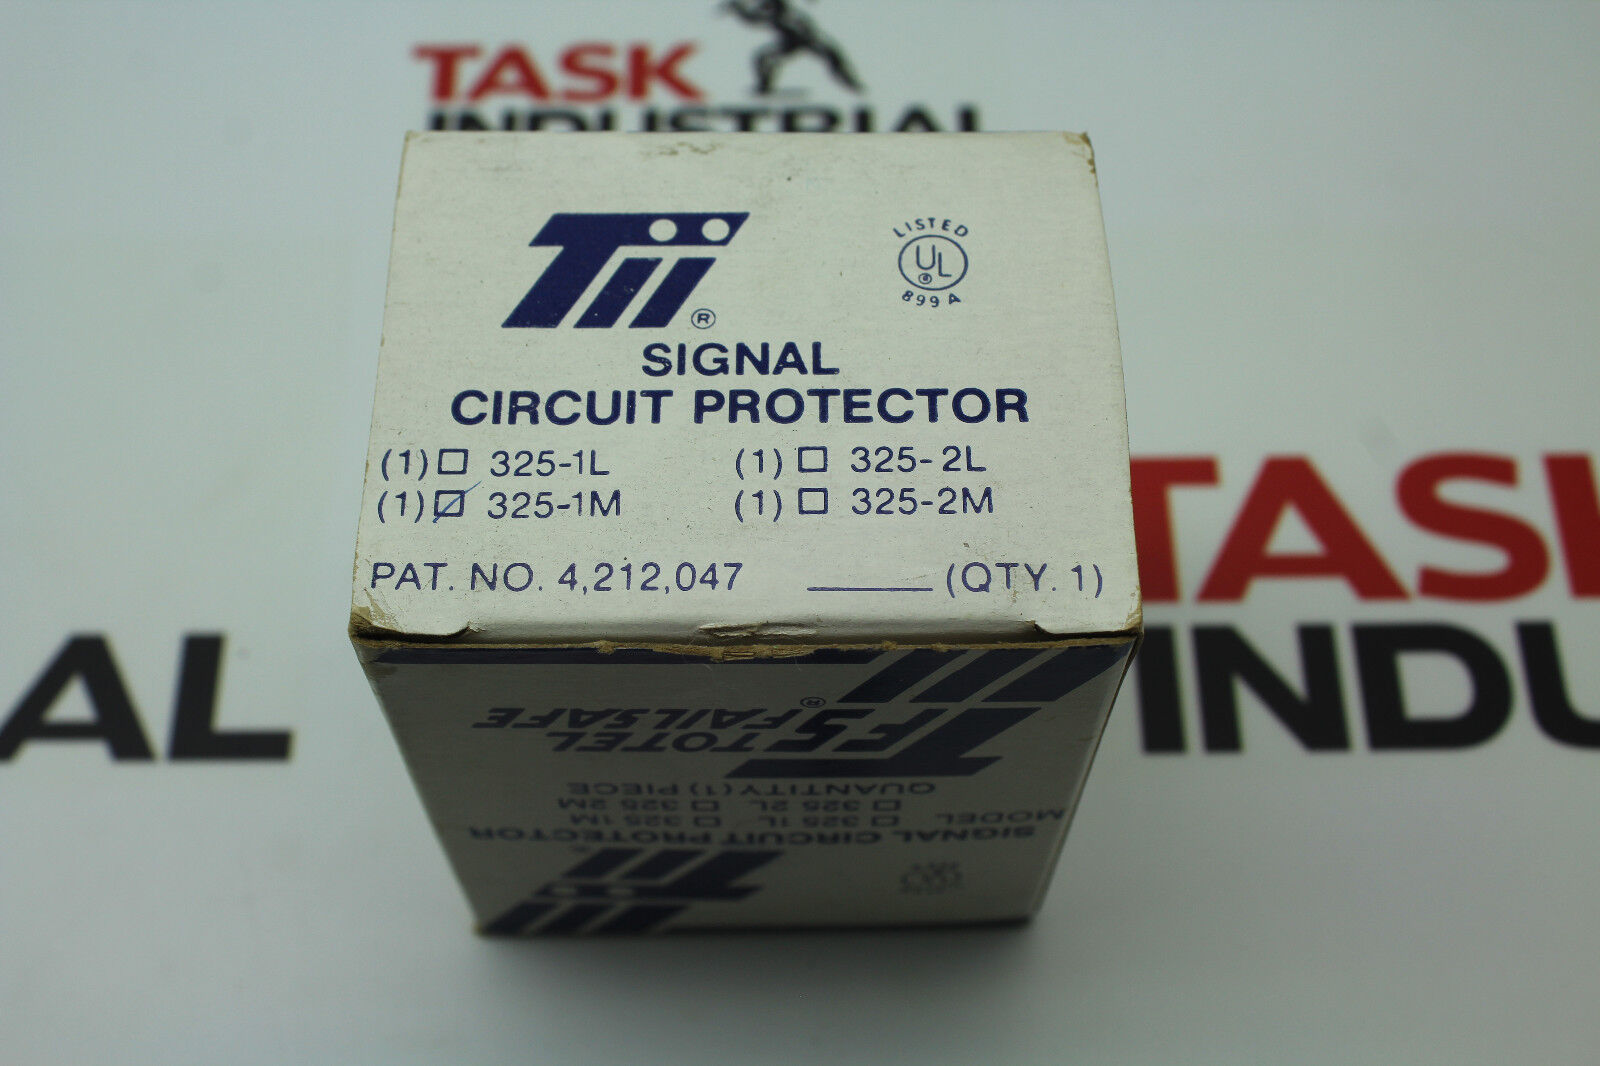 TII supreme Signal Circuit Protector 325-1M Max 64% OFF